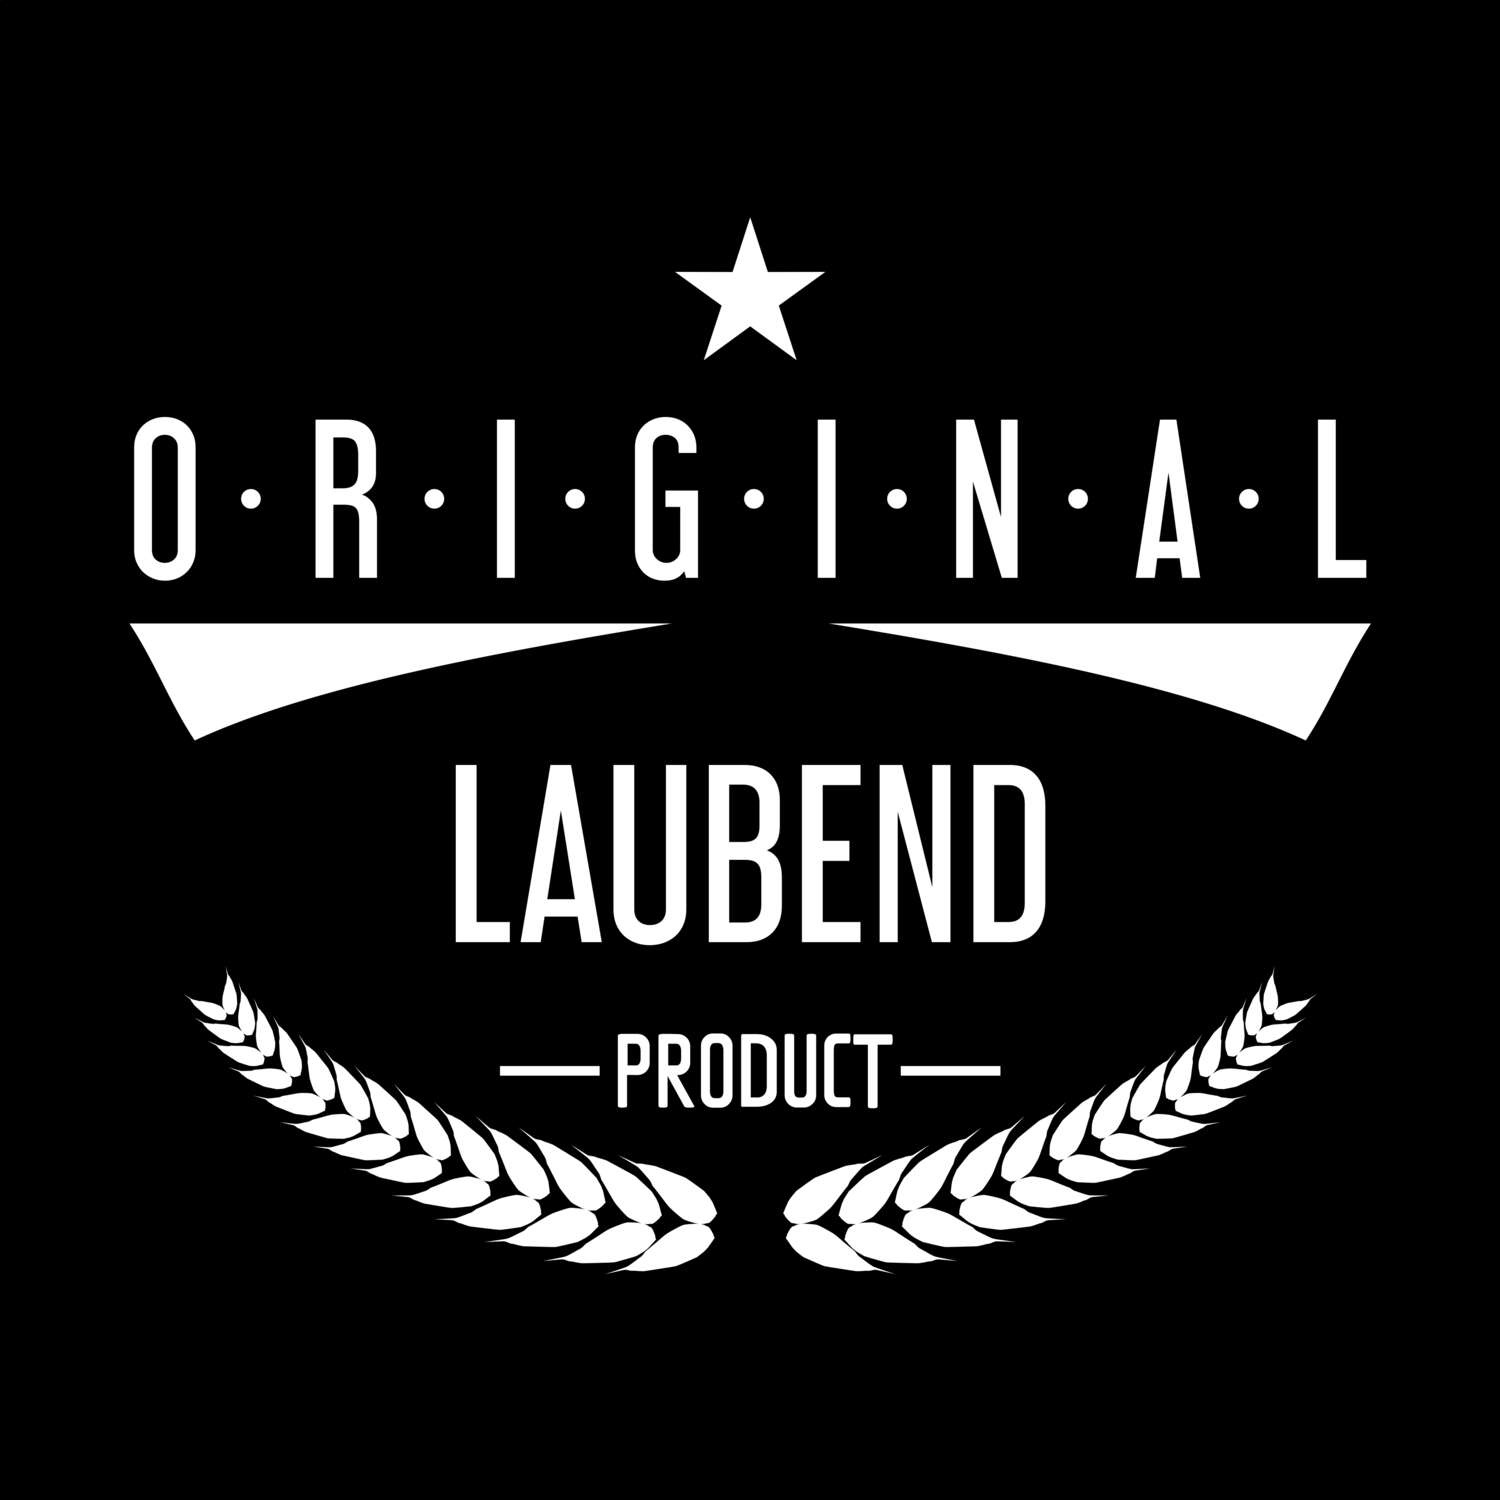 Laubend T-Shirt »Original Product«